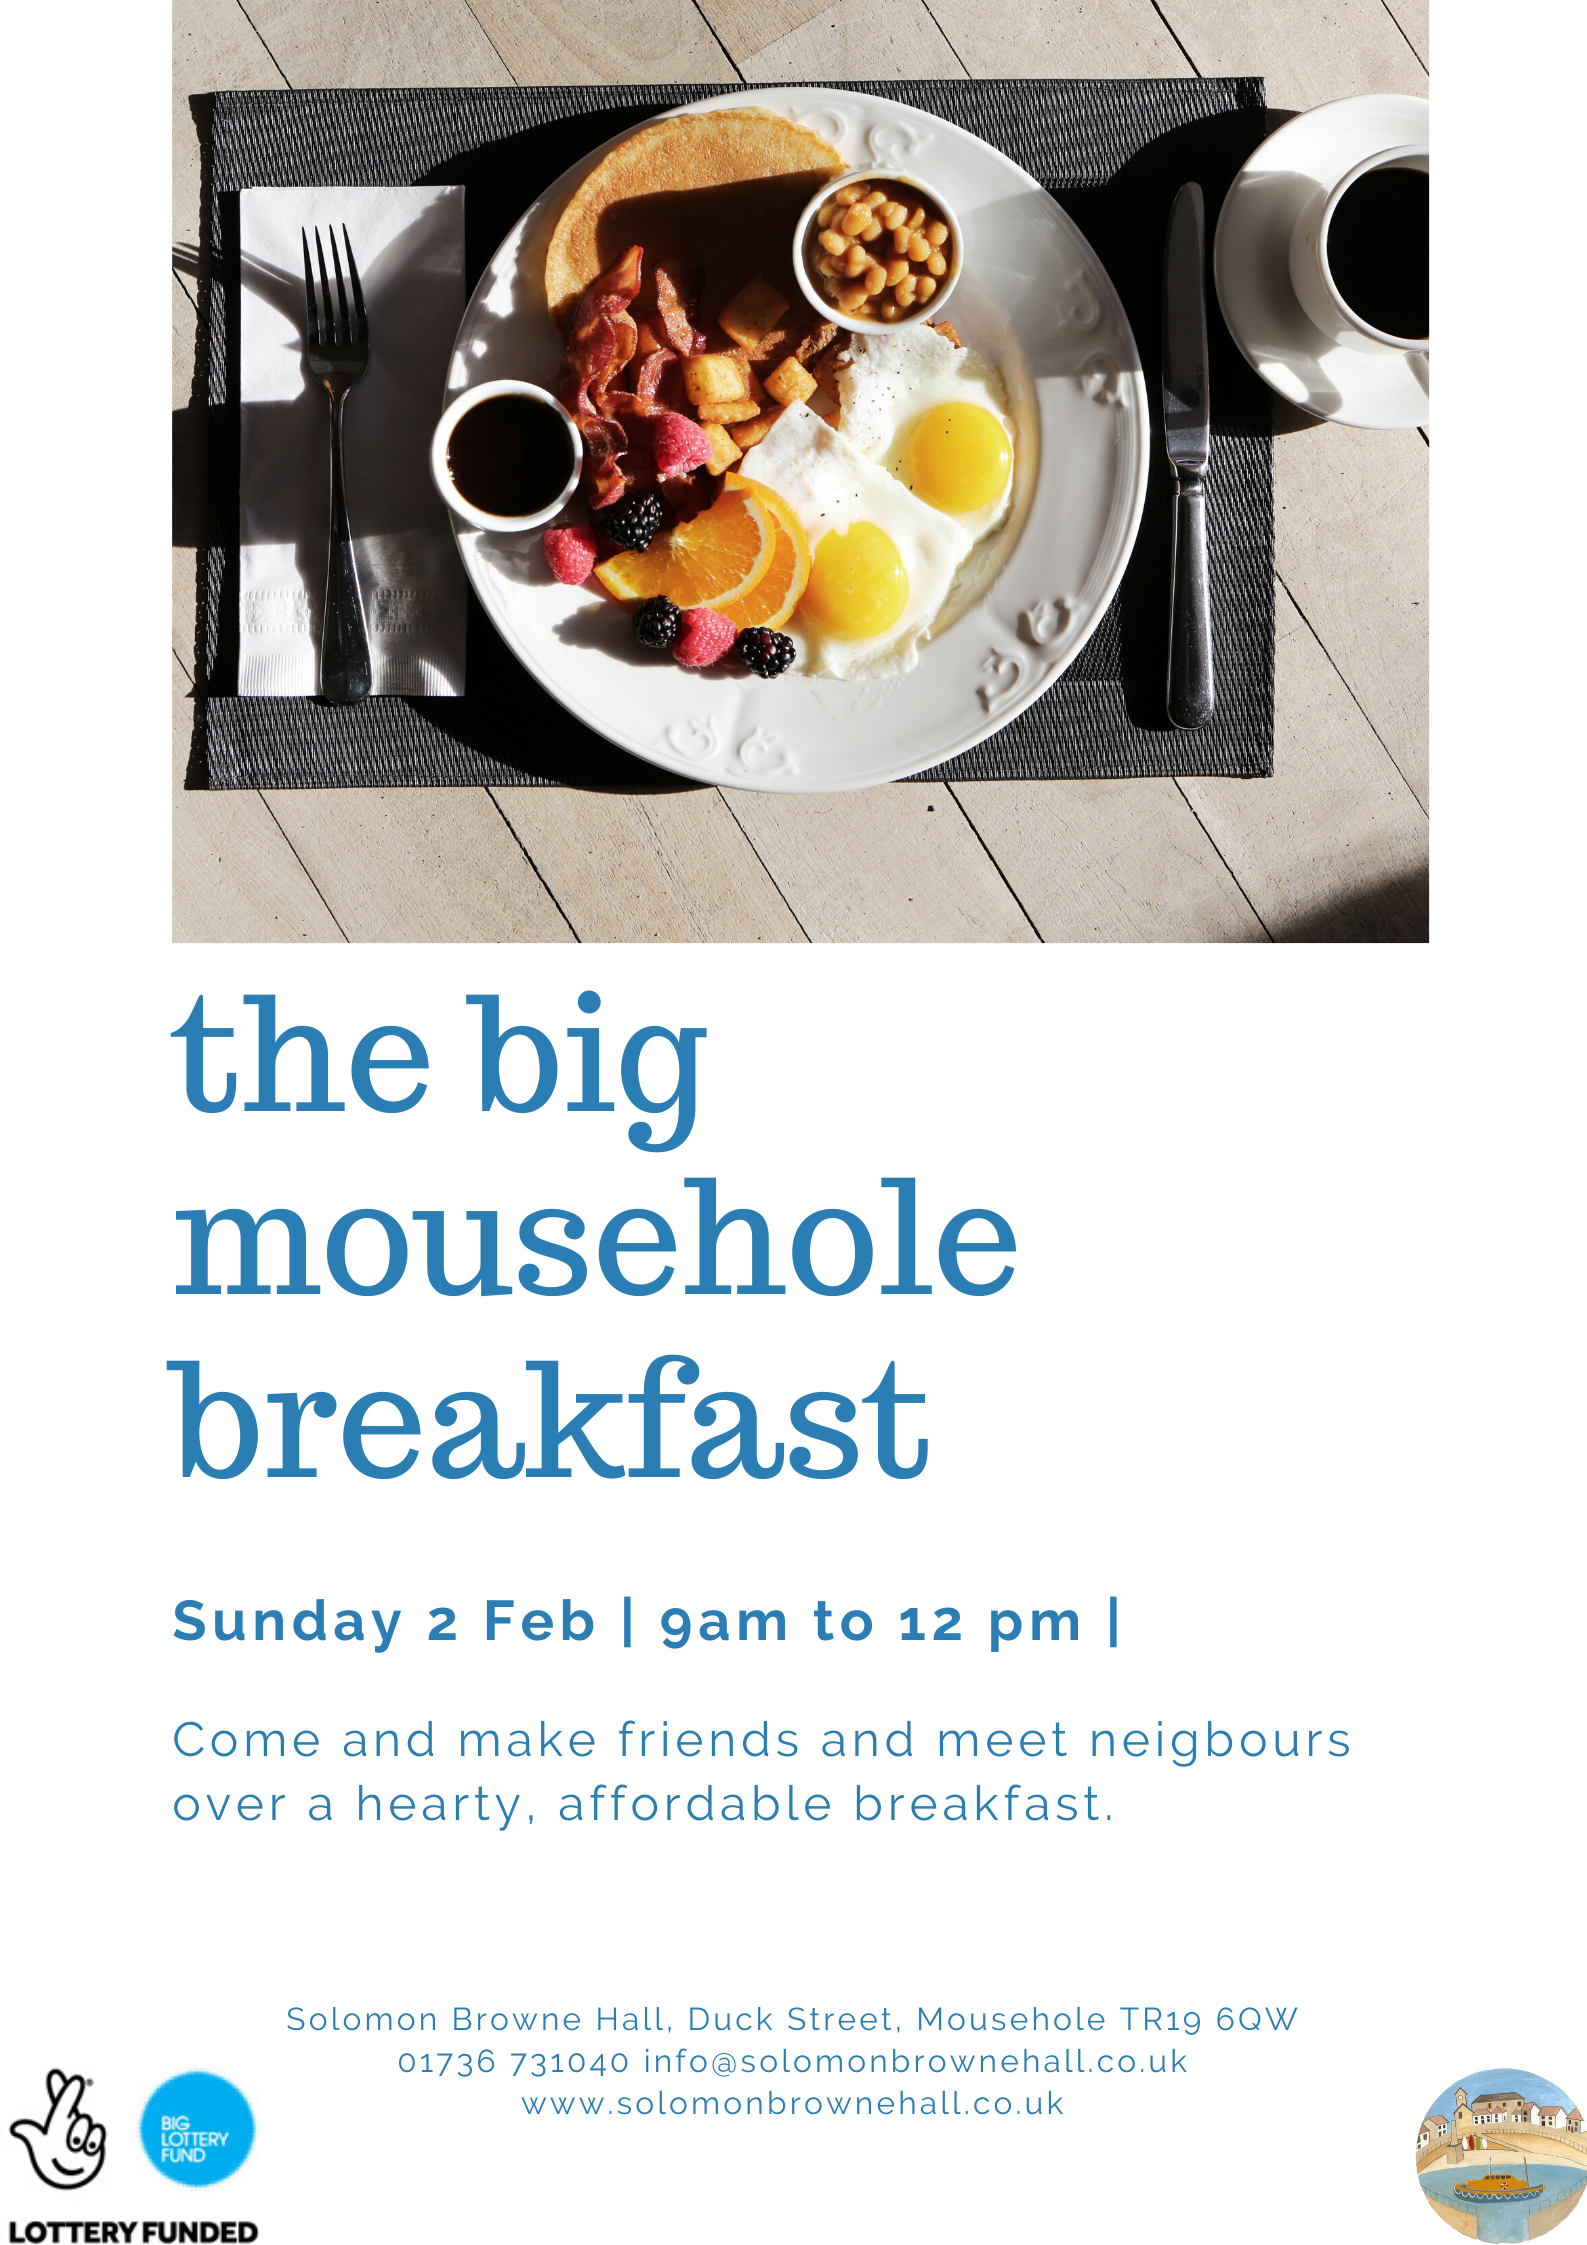 The Big Mousehole Breakfast